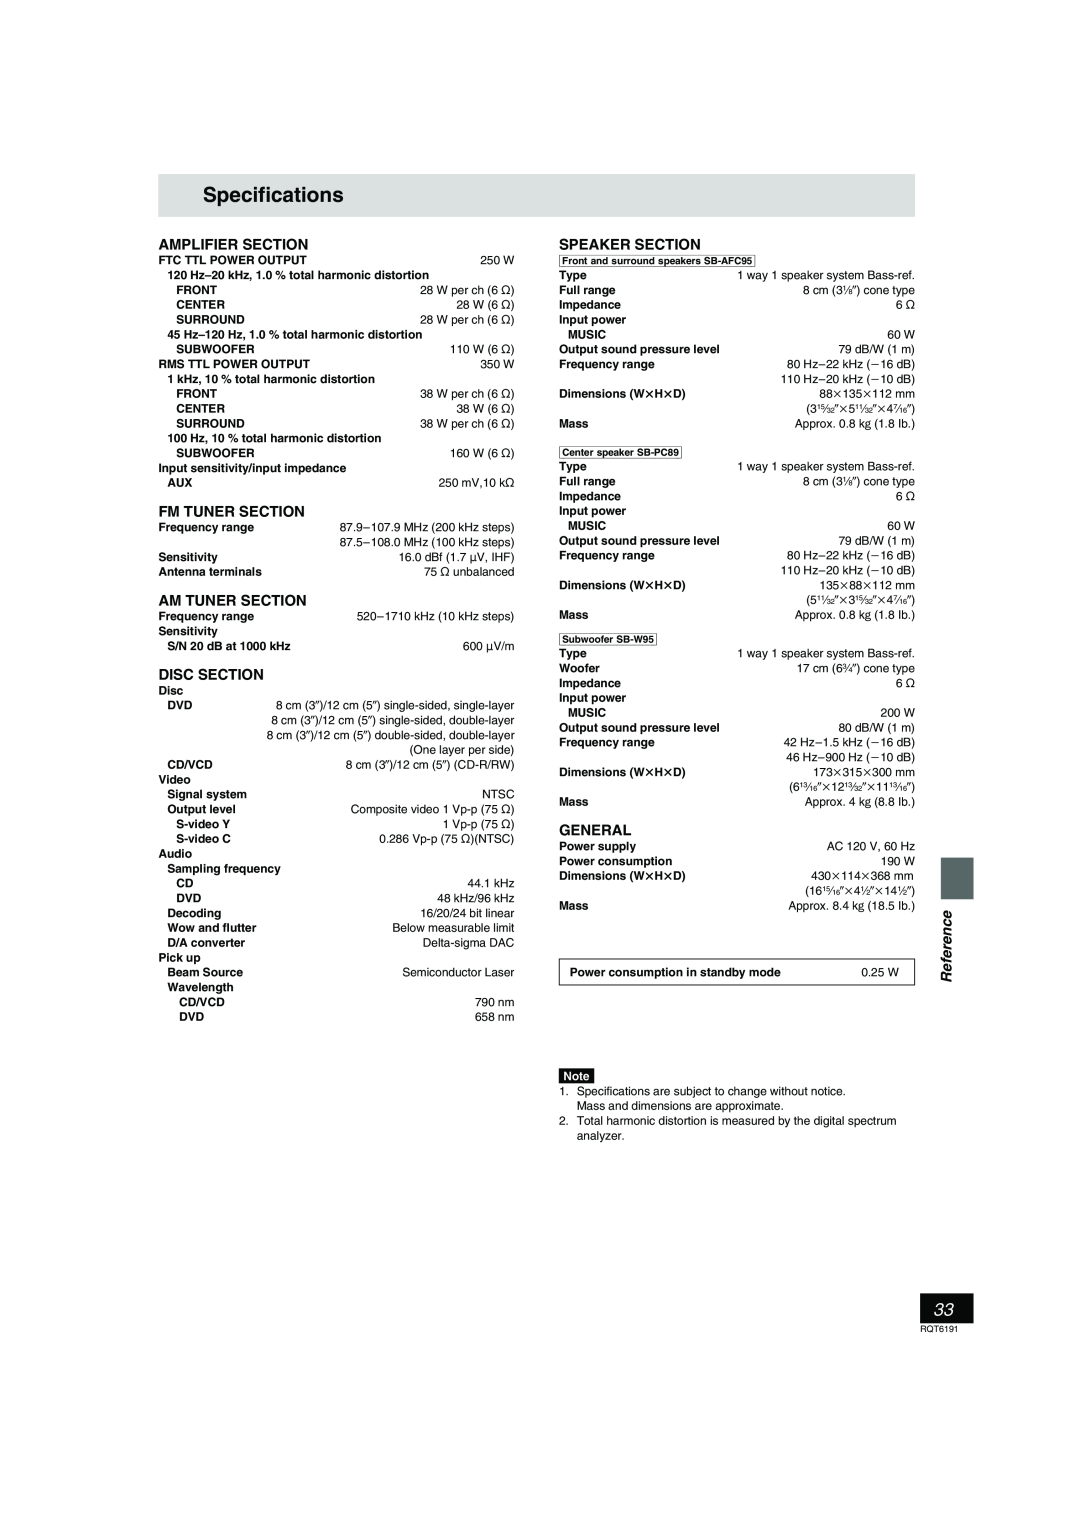 Panasonic SC-HT67 Specifications, Amplifier Section, Fm Tuner Section, Am Tuner Section, Disc Section, Speaker Section 